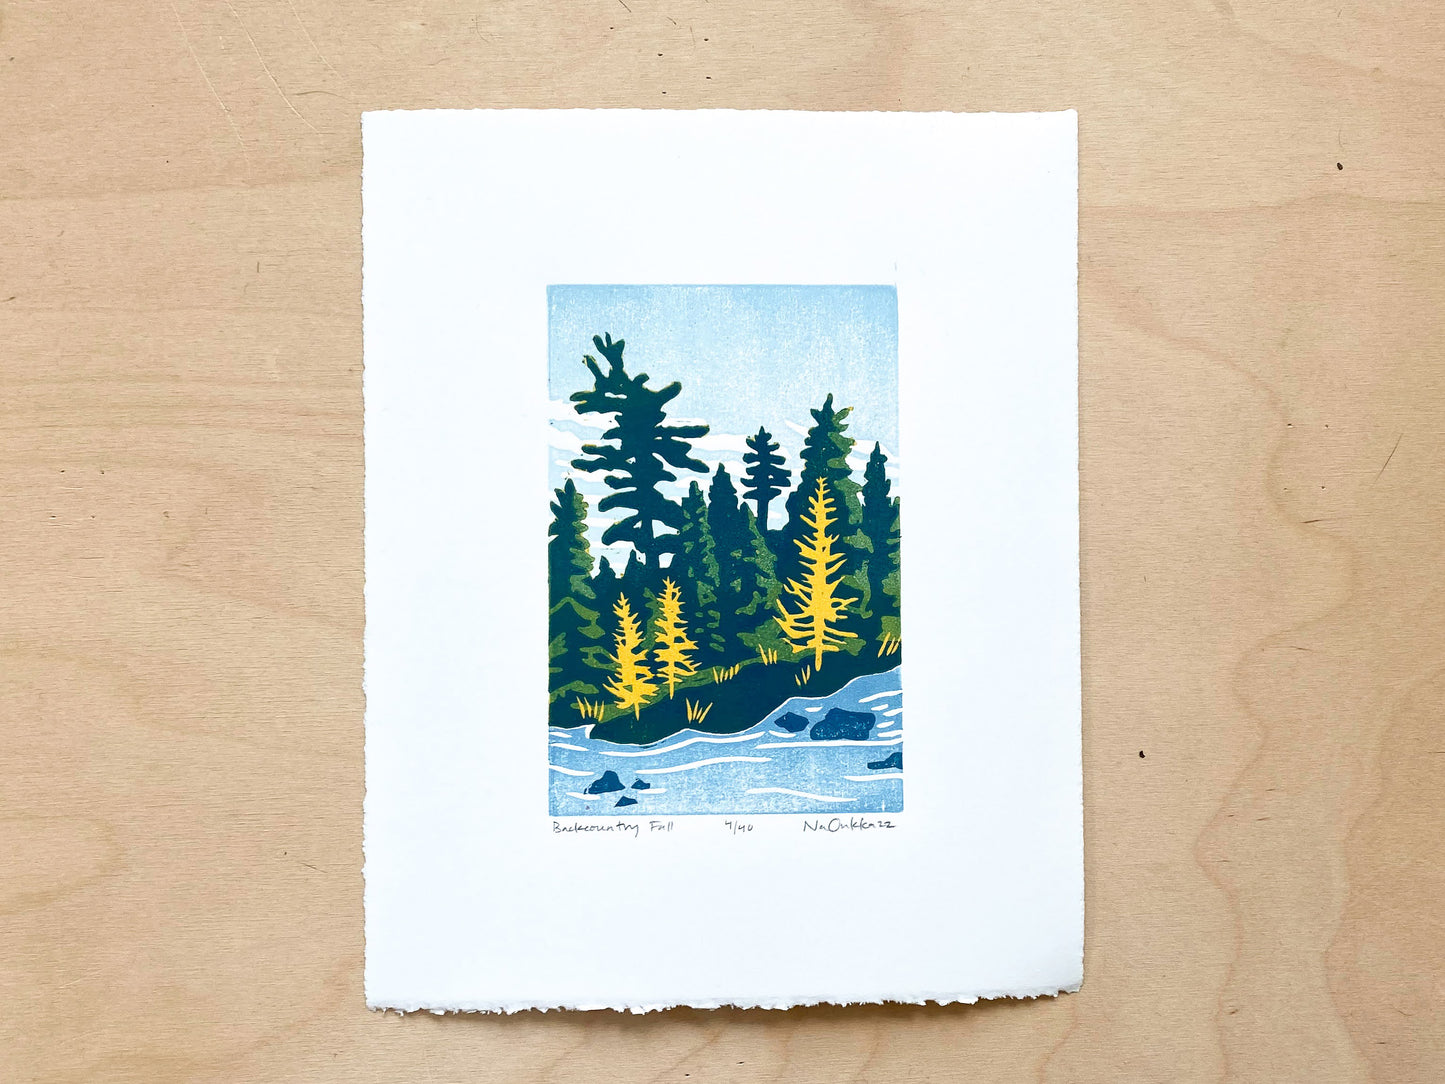 Backcountry Fall Woodcut Print